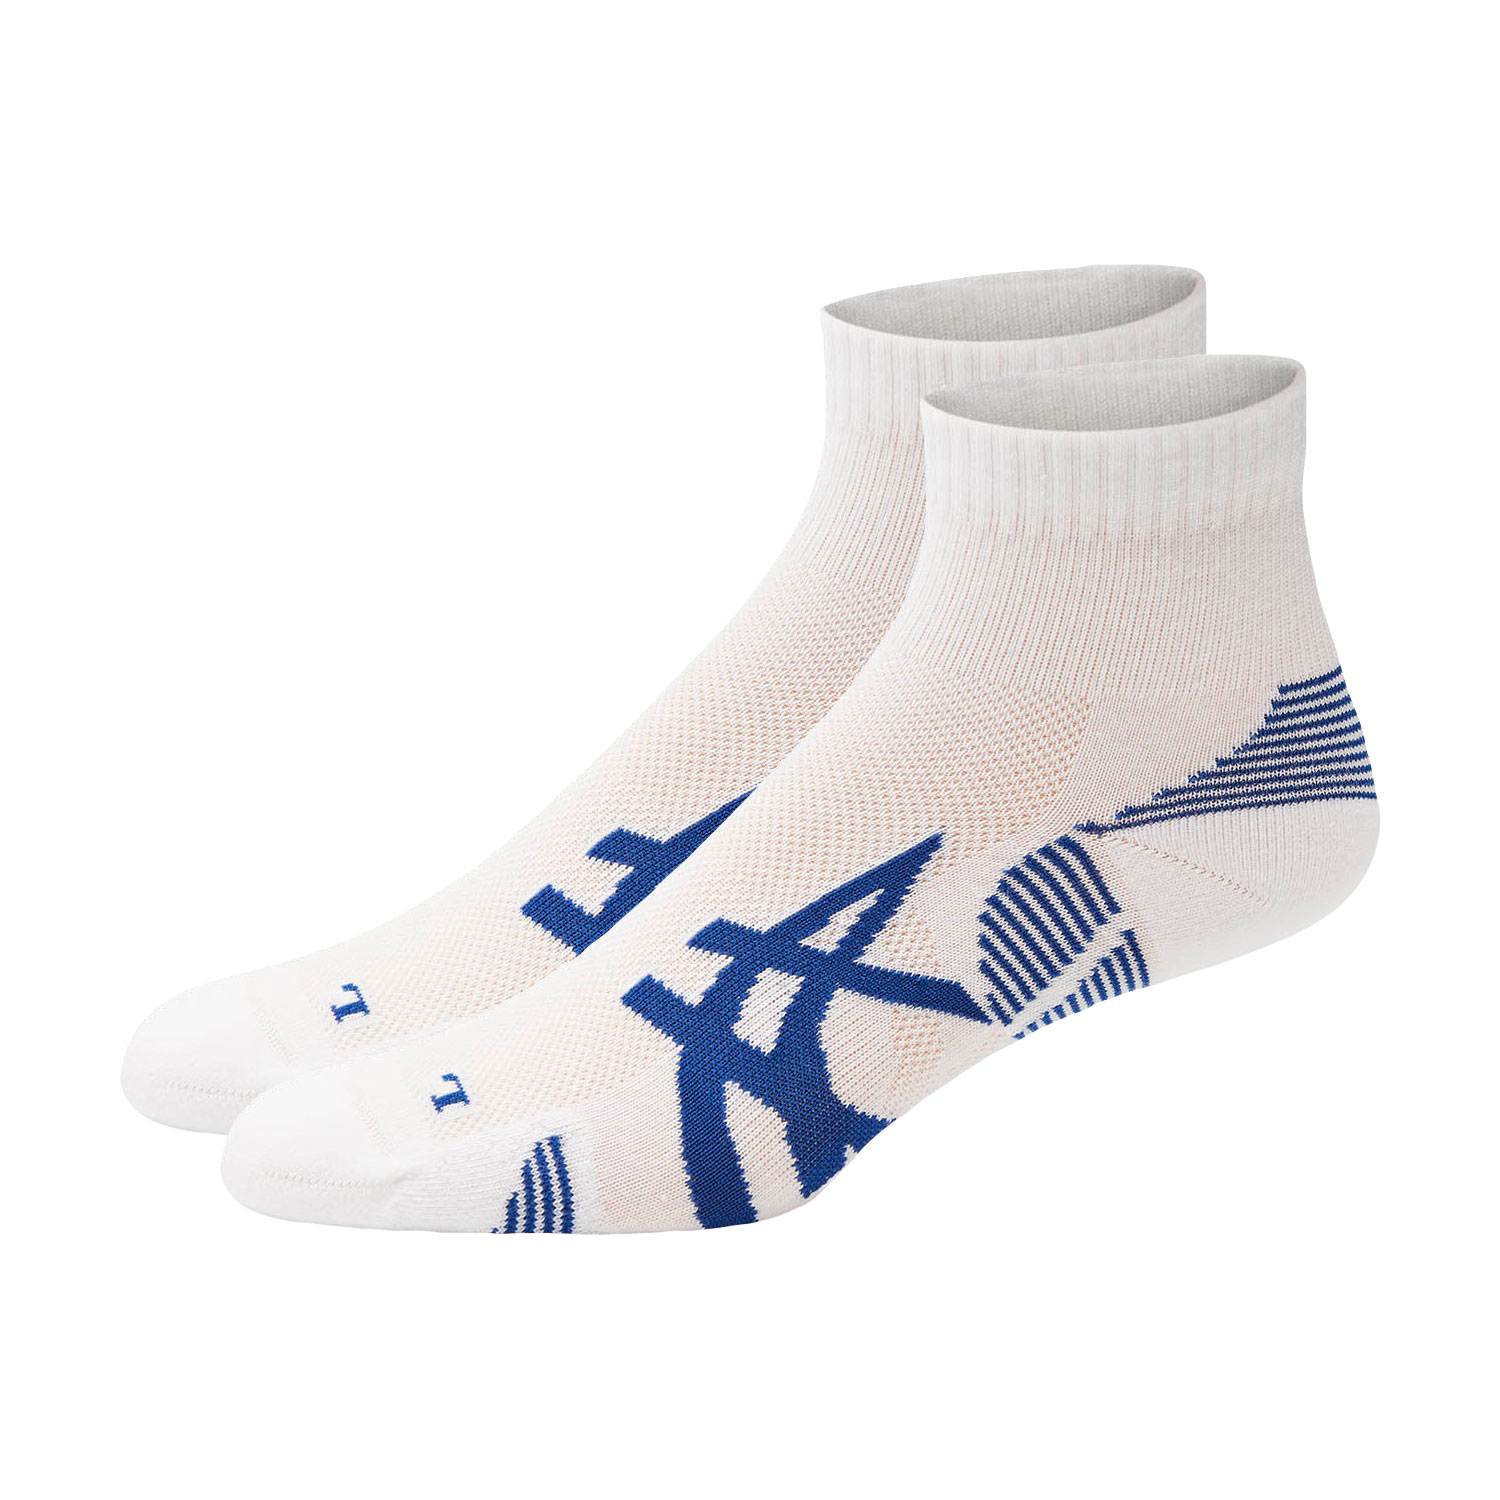 Asics Cushion x 2 Running Socks - Brilliant White/Blue